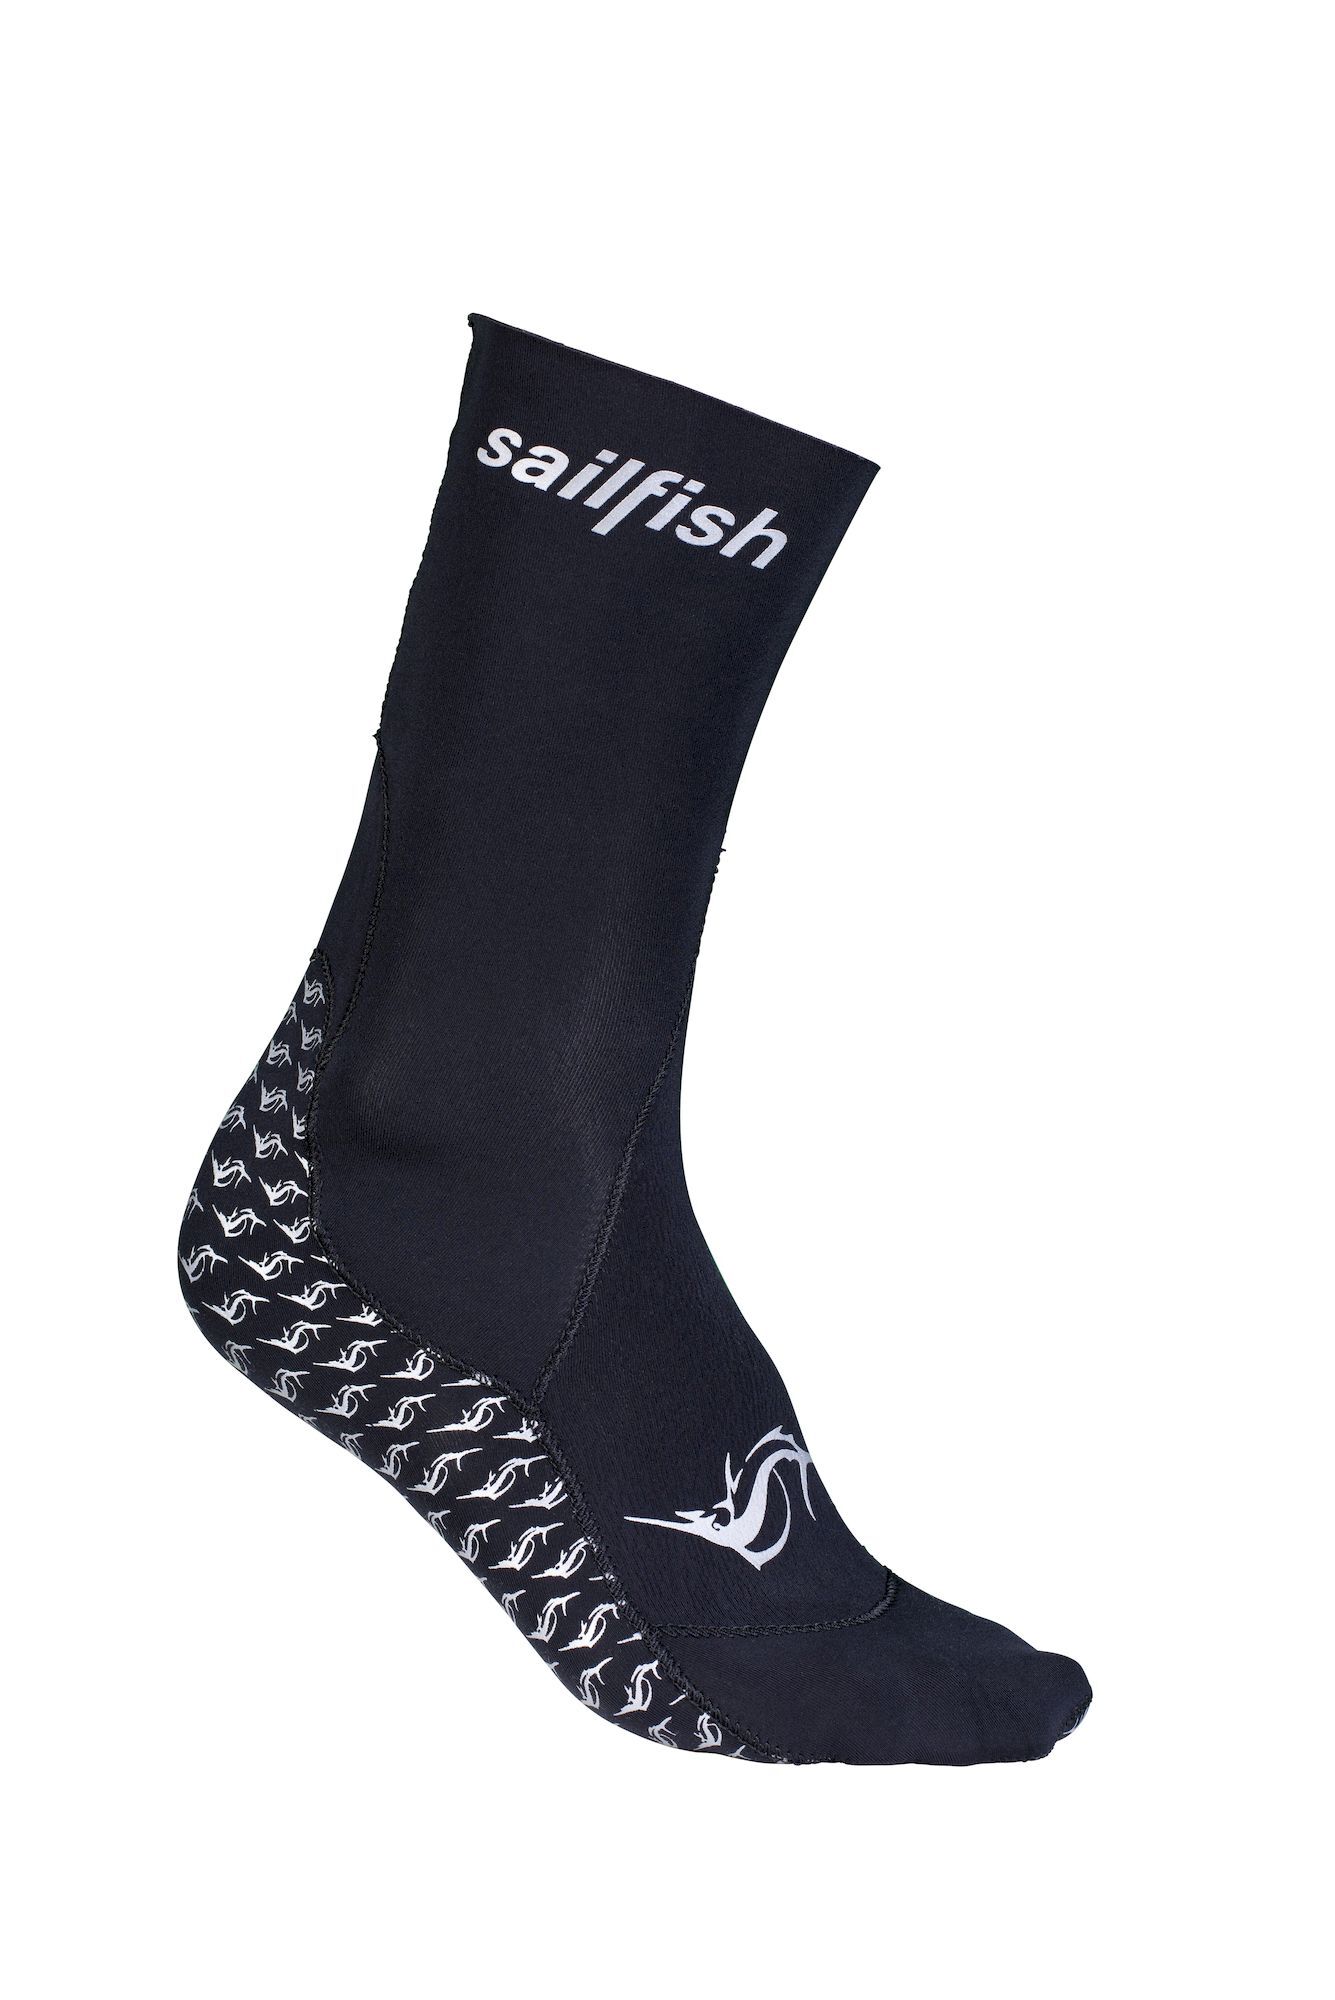 Sailfish Neoprene Socks - Neoprenschuhe | Hardloop